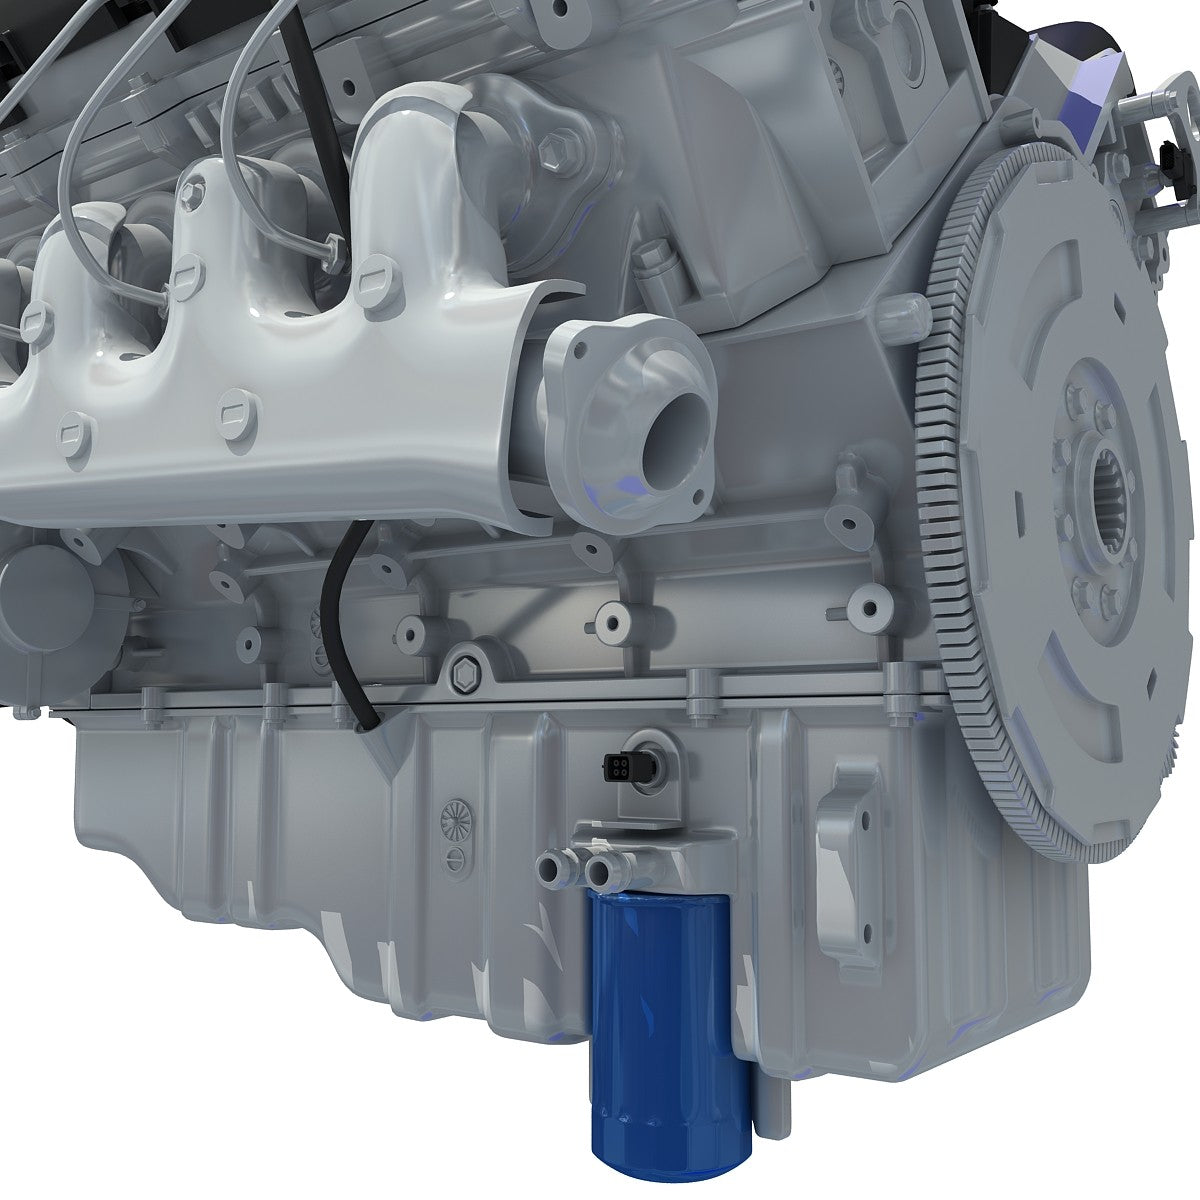 New V8 Chevrolet Silverado Engine